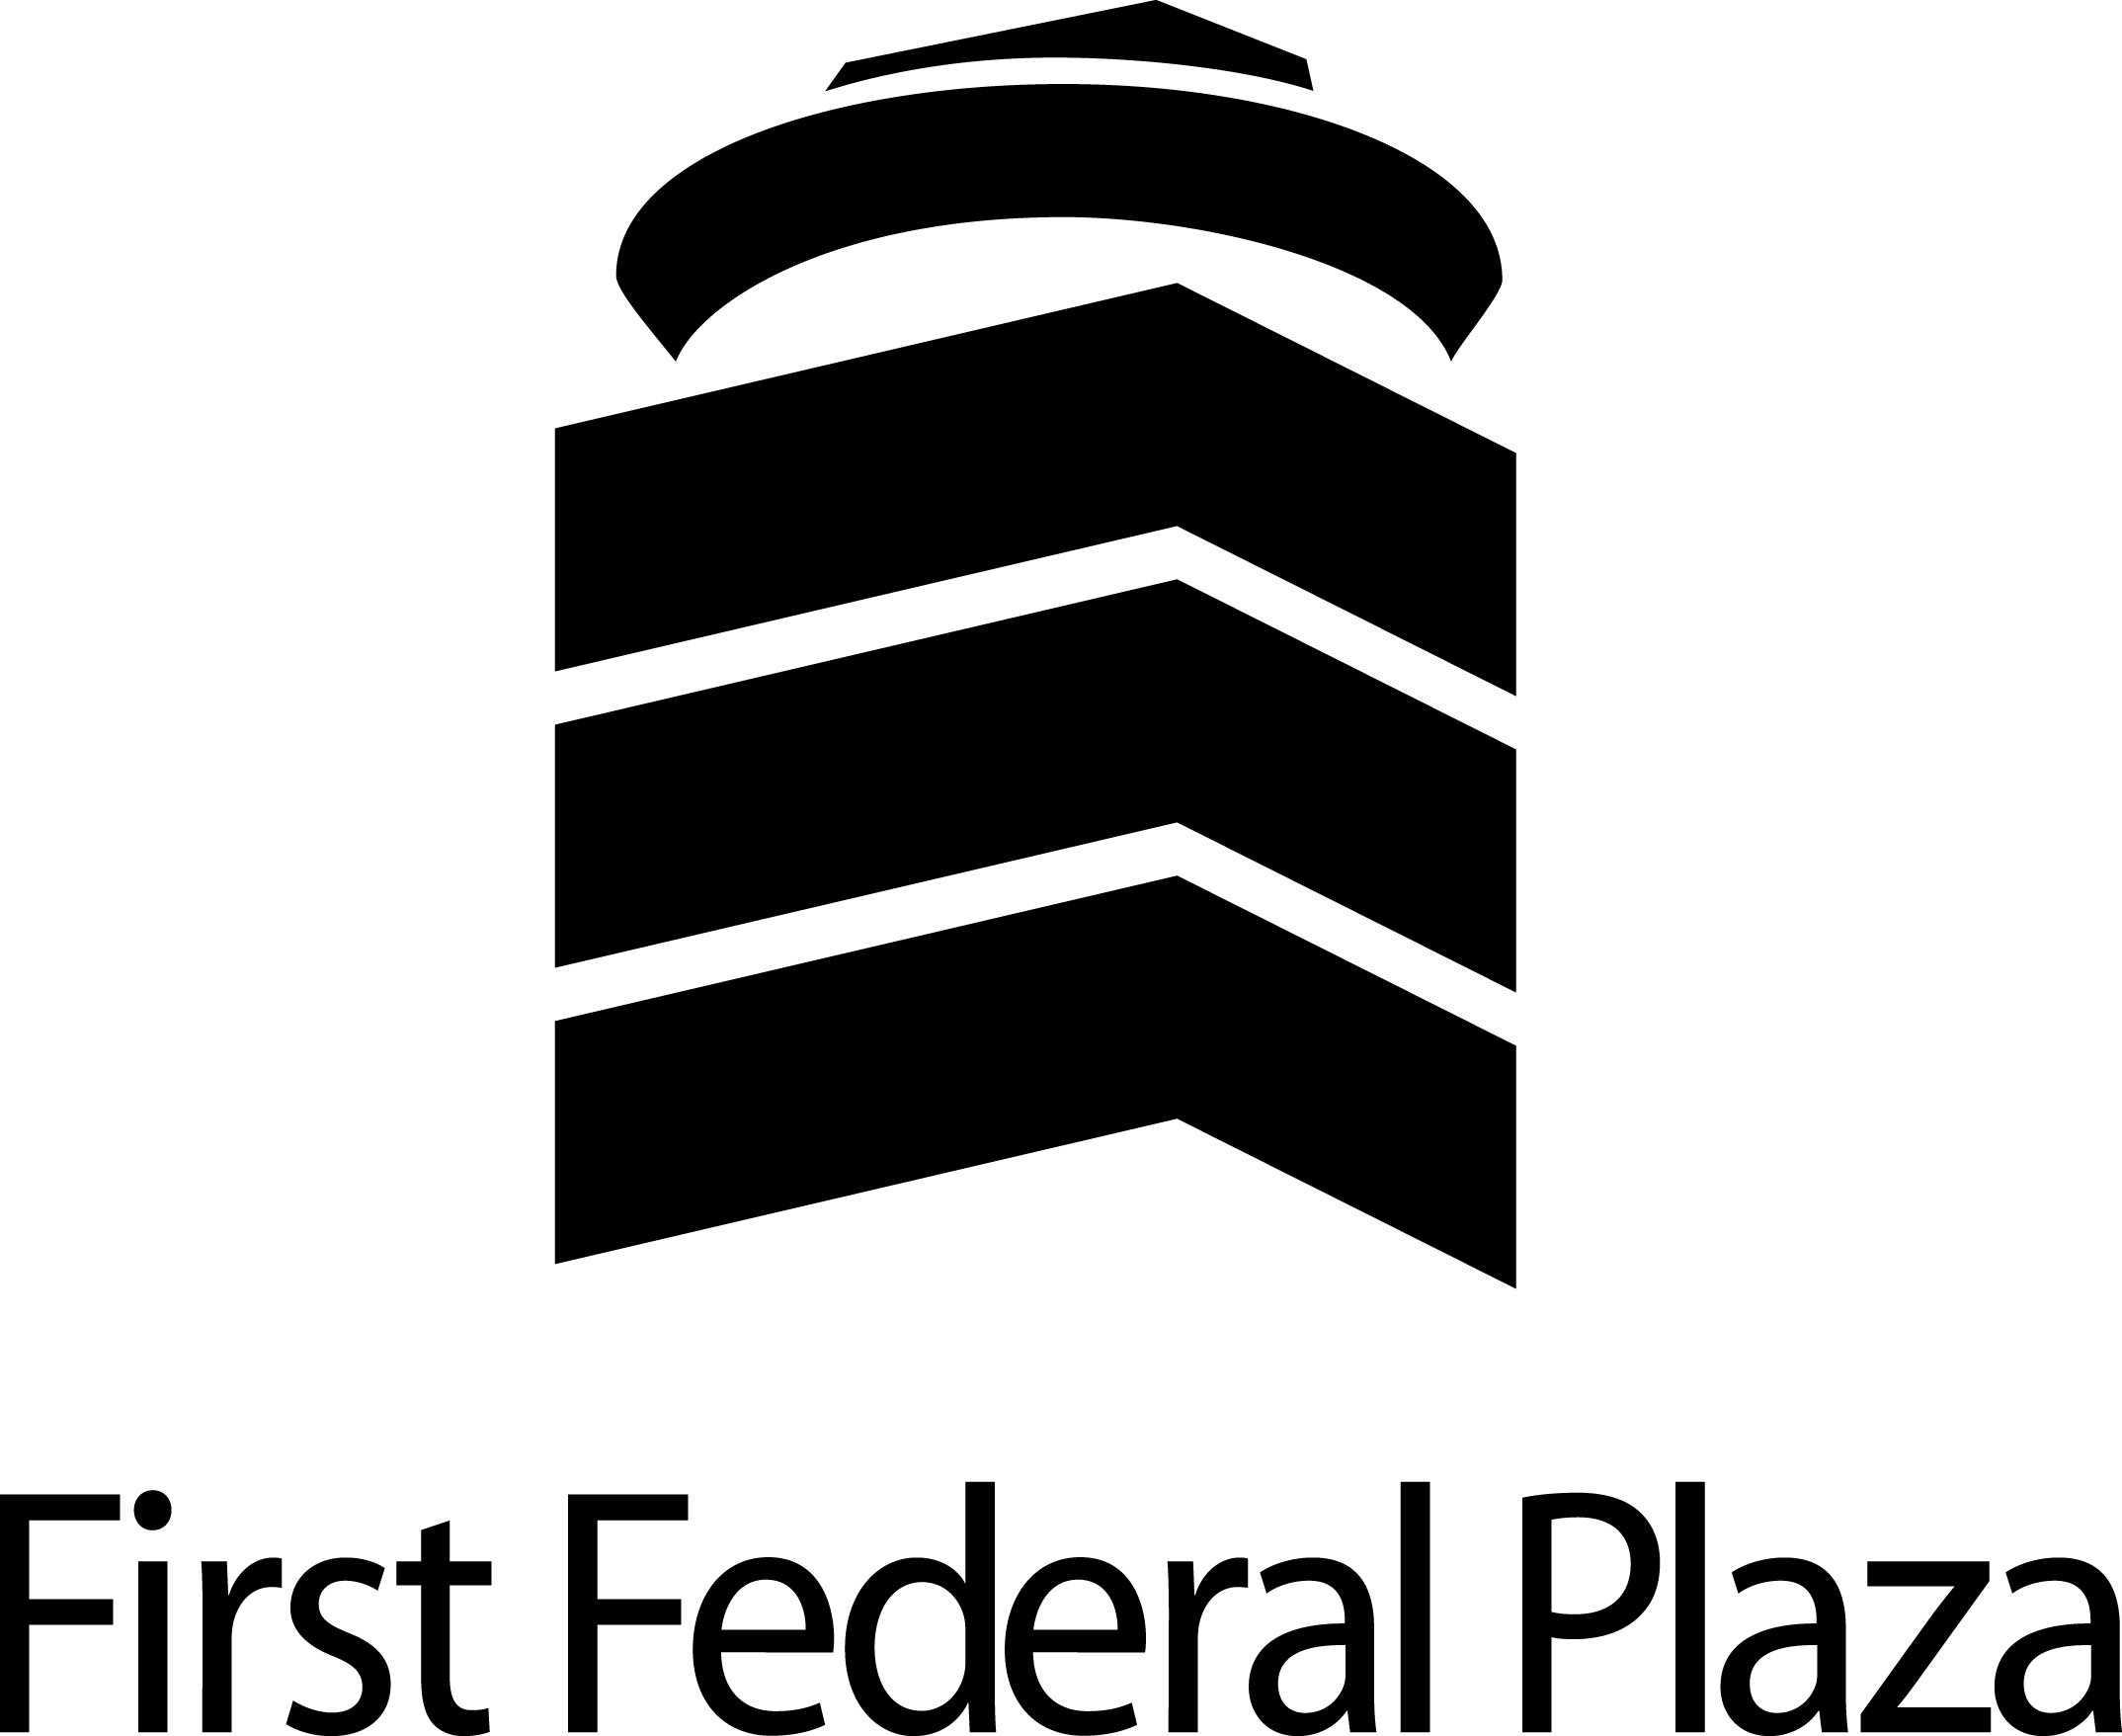 FirstFederal_iGordon_Logo_Final (3).jpg